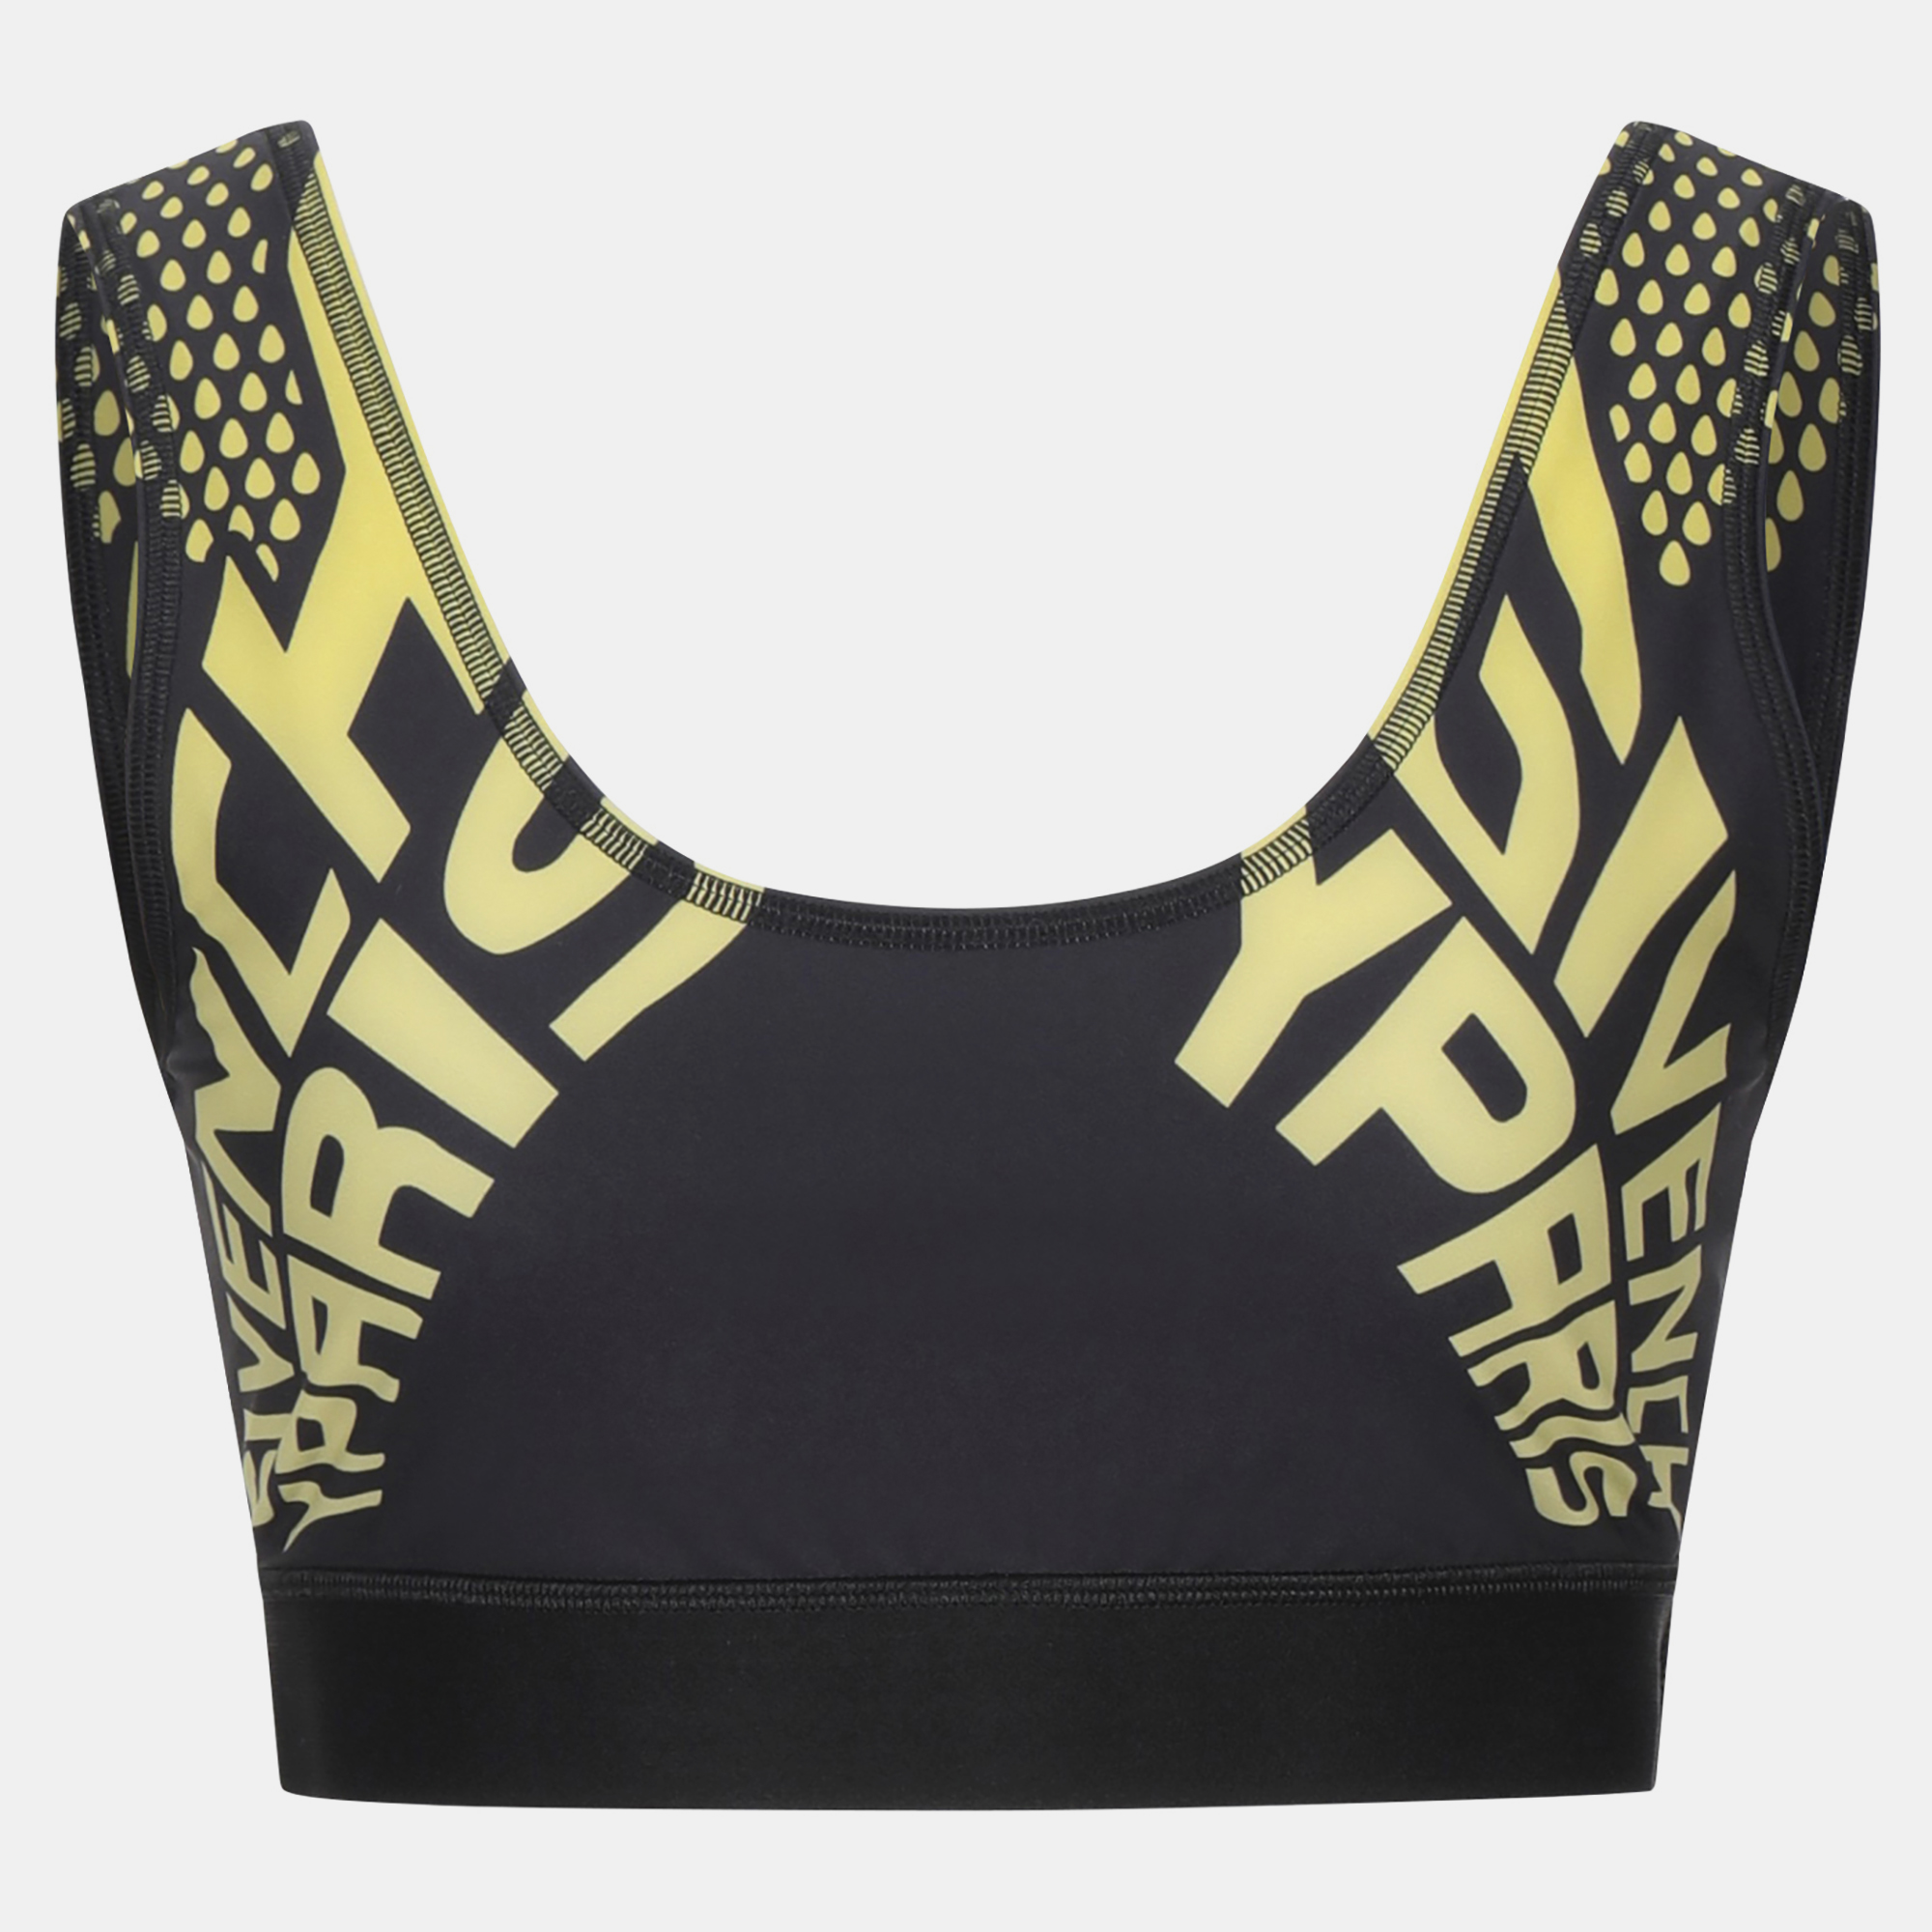 Givenchy black/yellow jersey sports bra top size 40